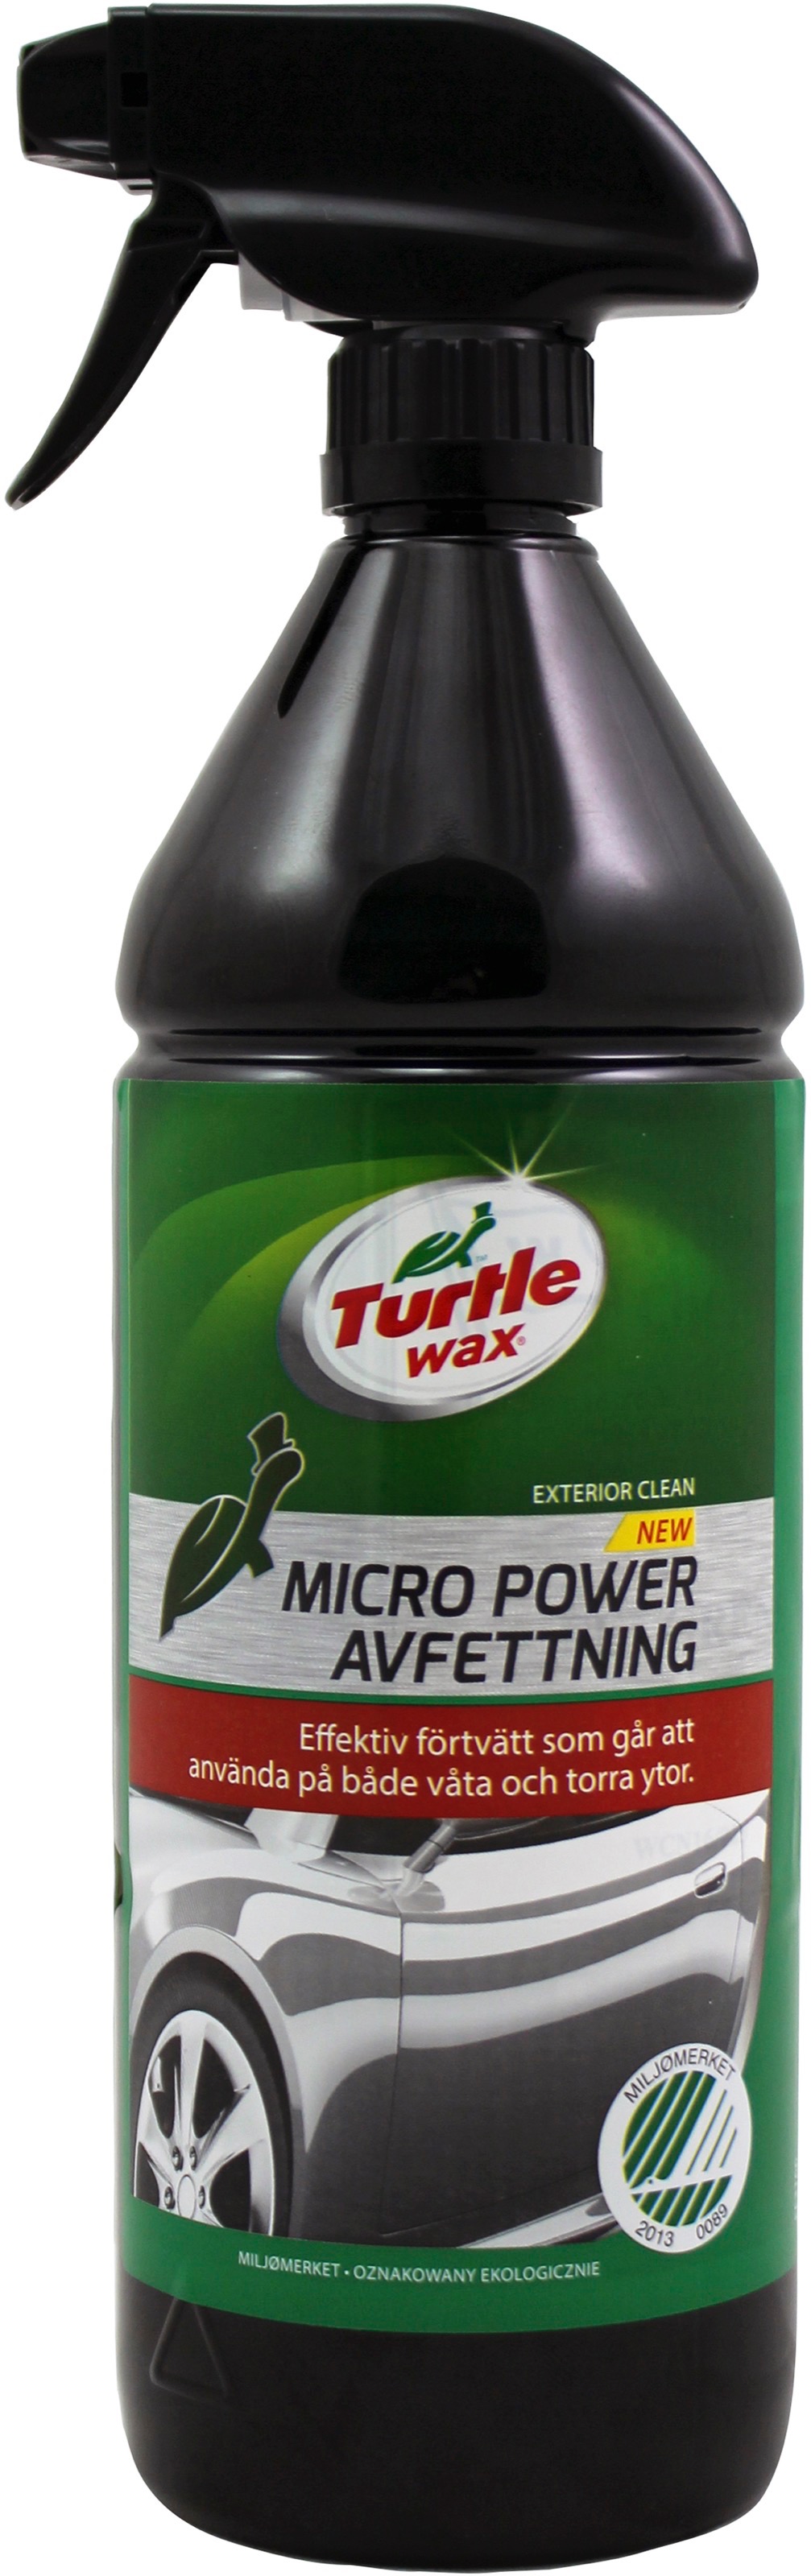 Produkt miniatyrebild Turtle Wax Micro Power avfetting